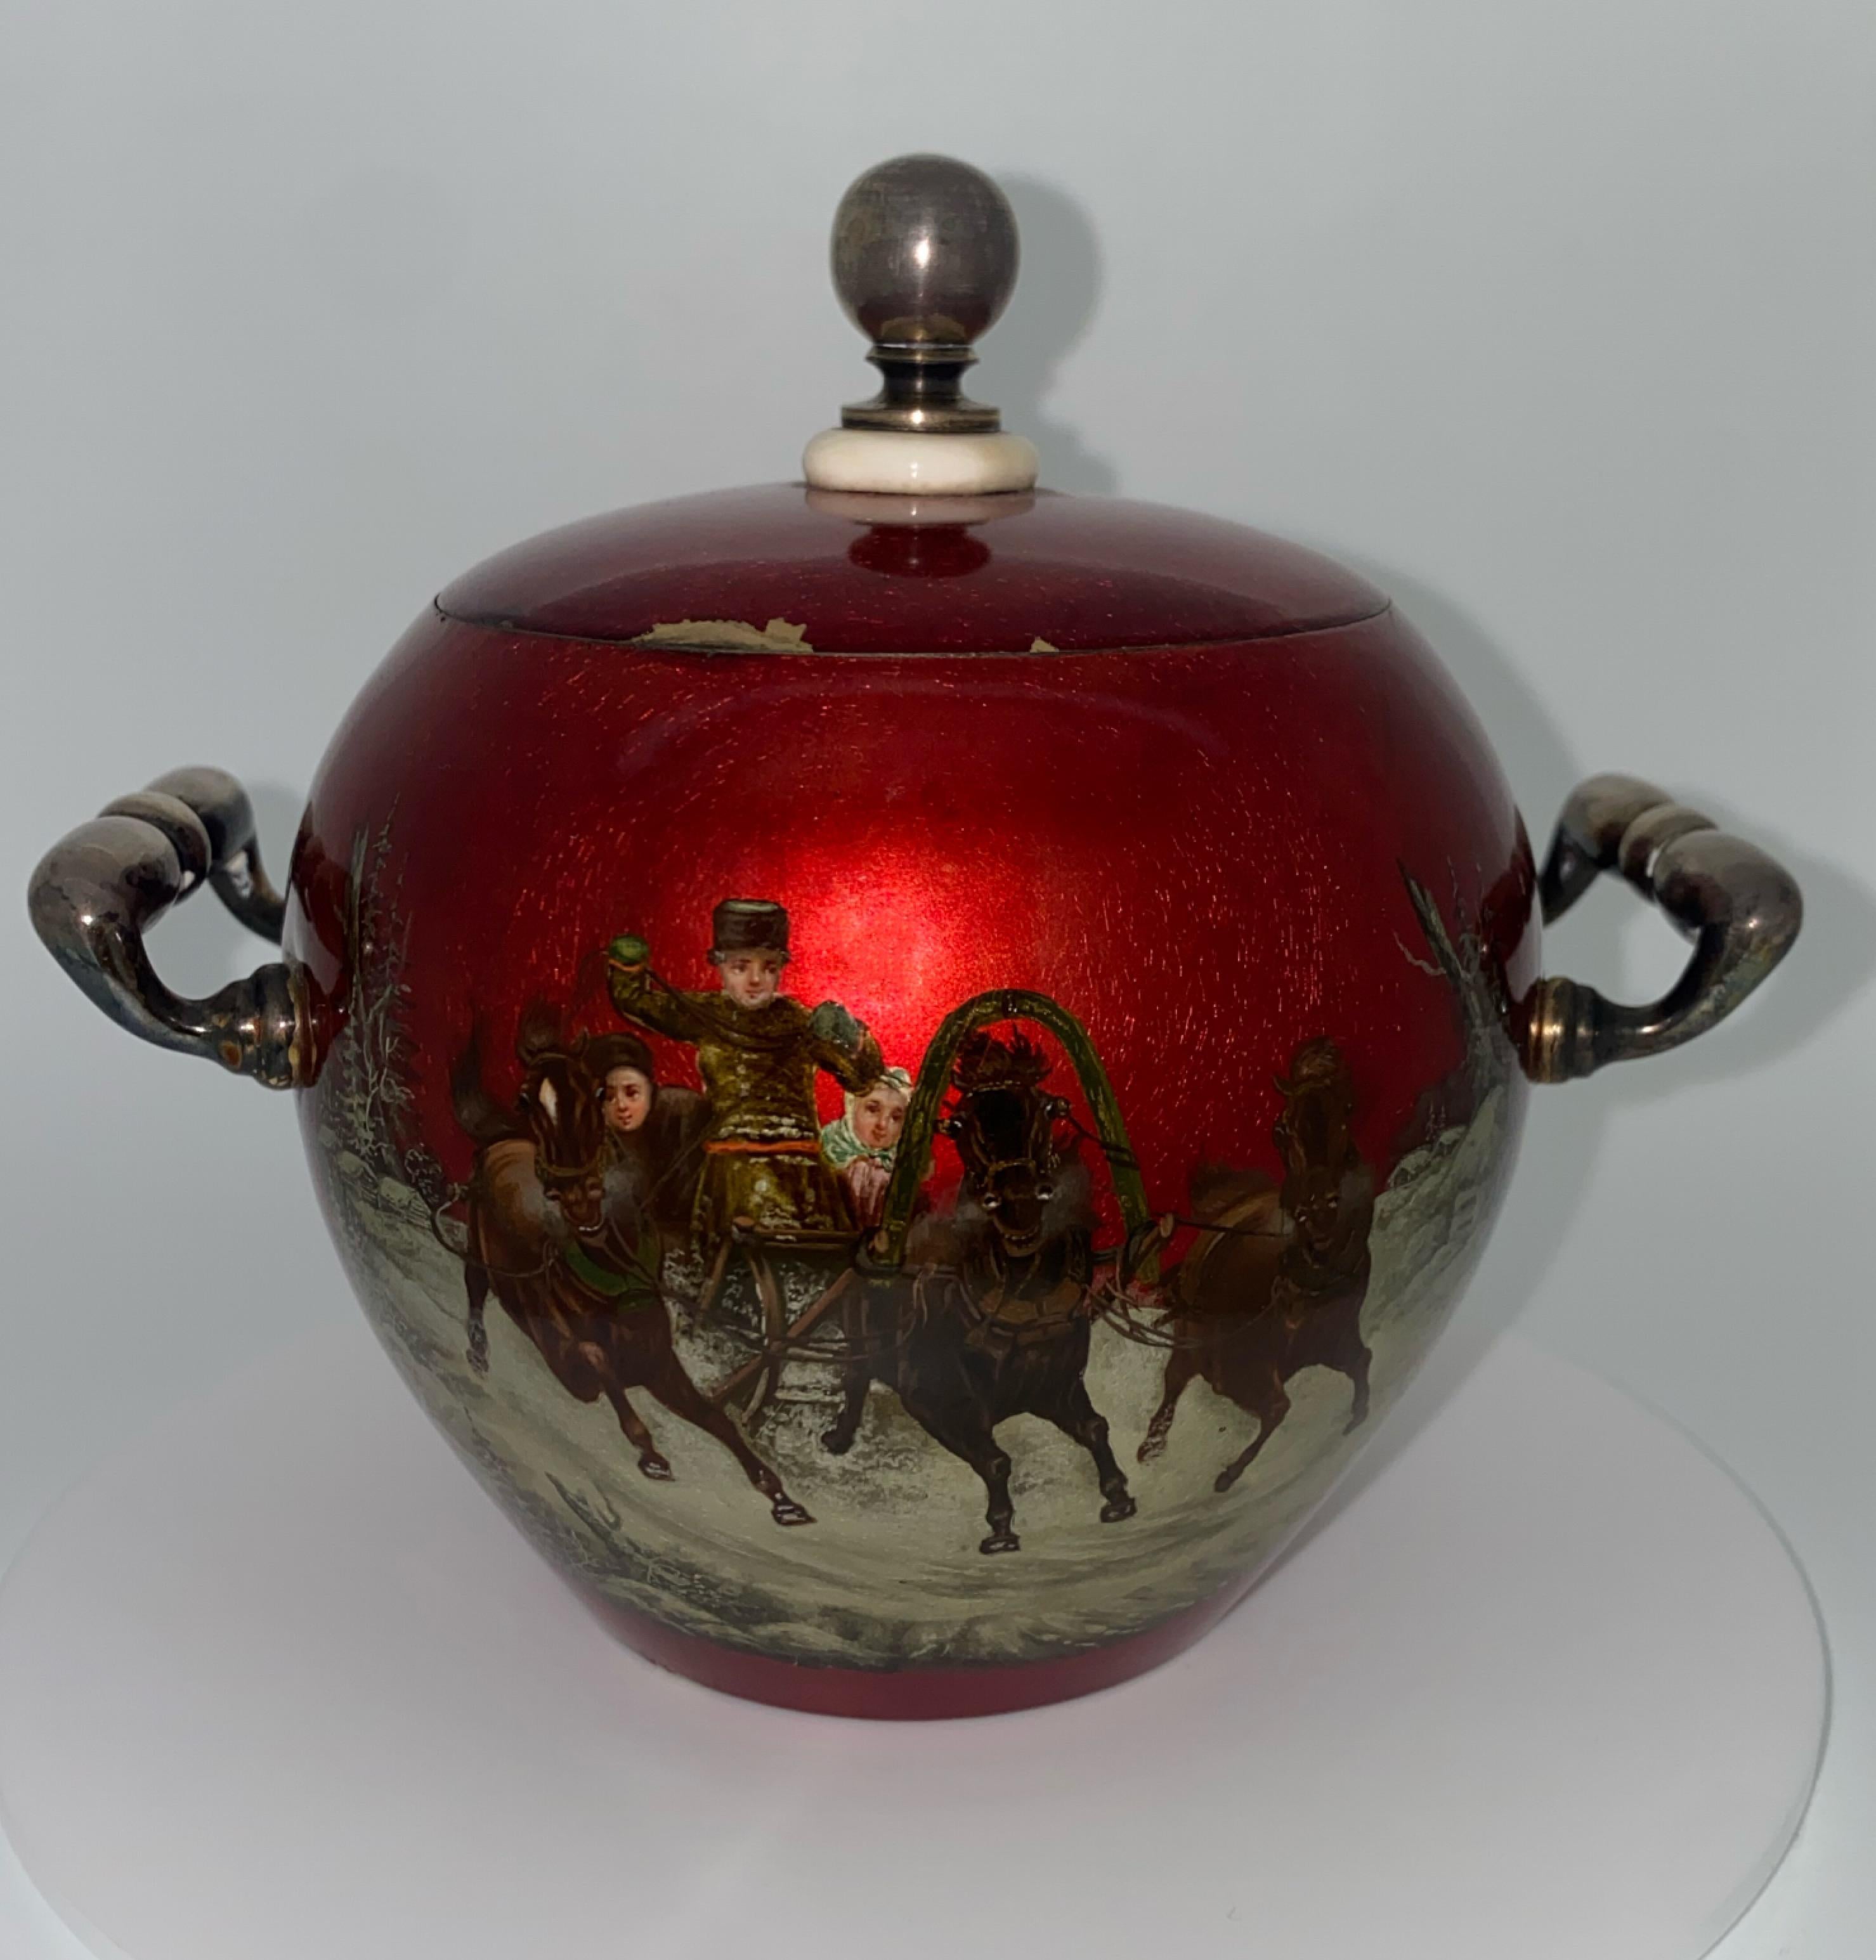 Russian Empire Imperial Russia c1895 Silver/Enamel Tea Set “Seasons” by I. Morozov, Kvetkovsky For Sale